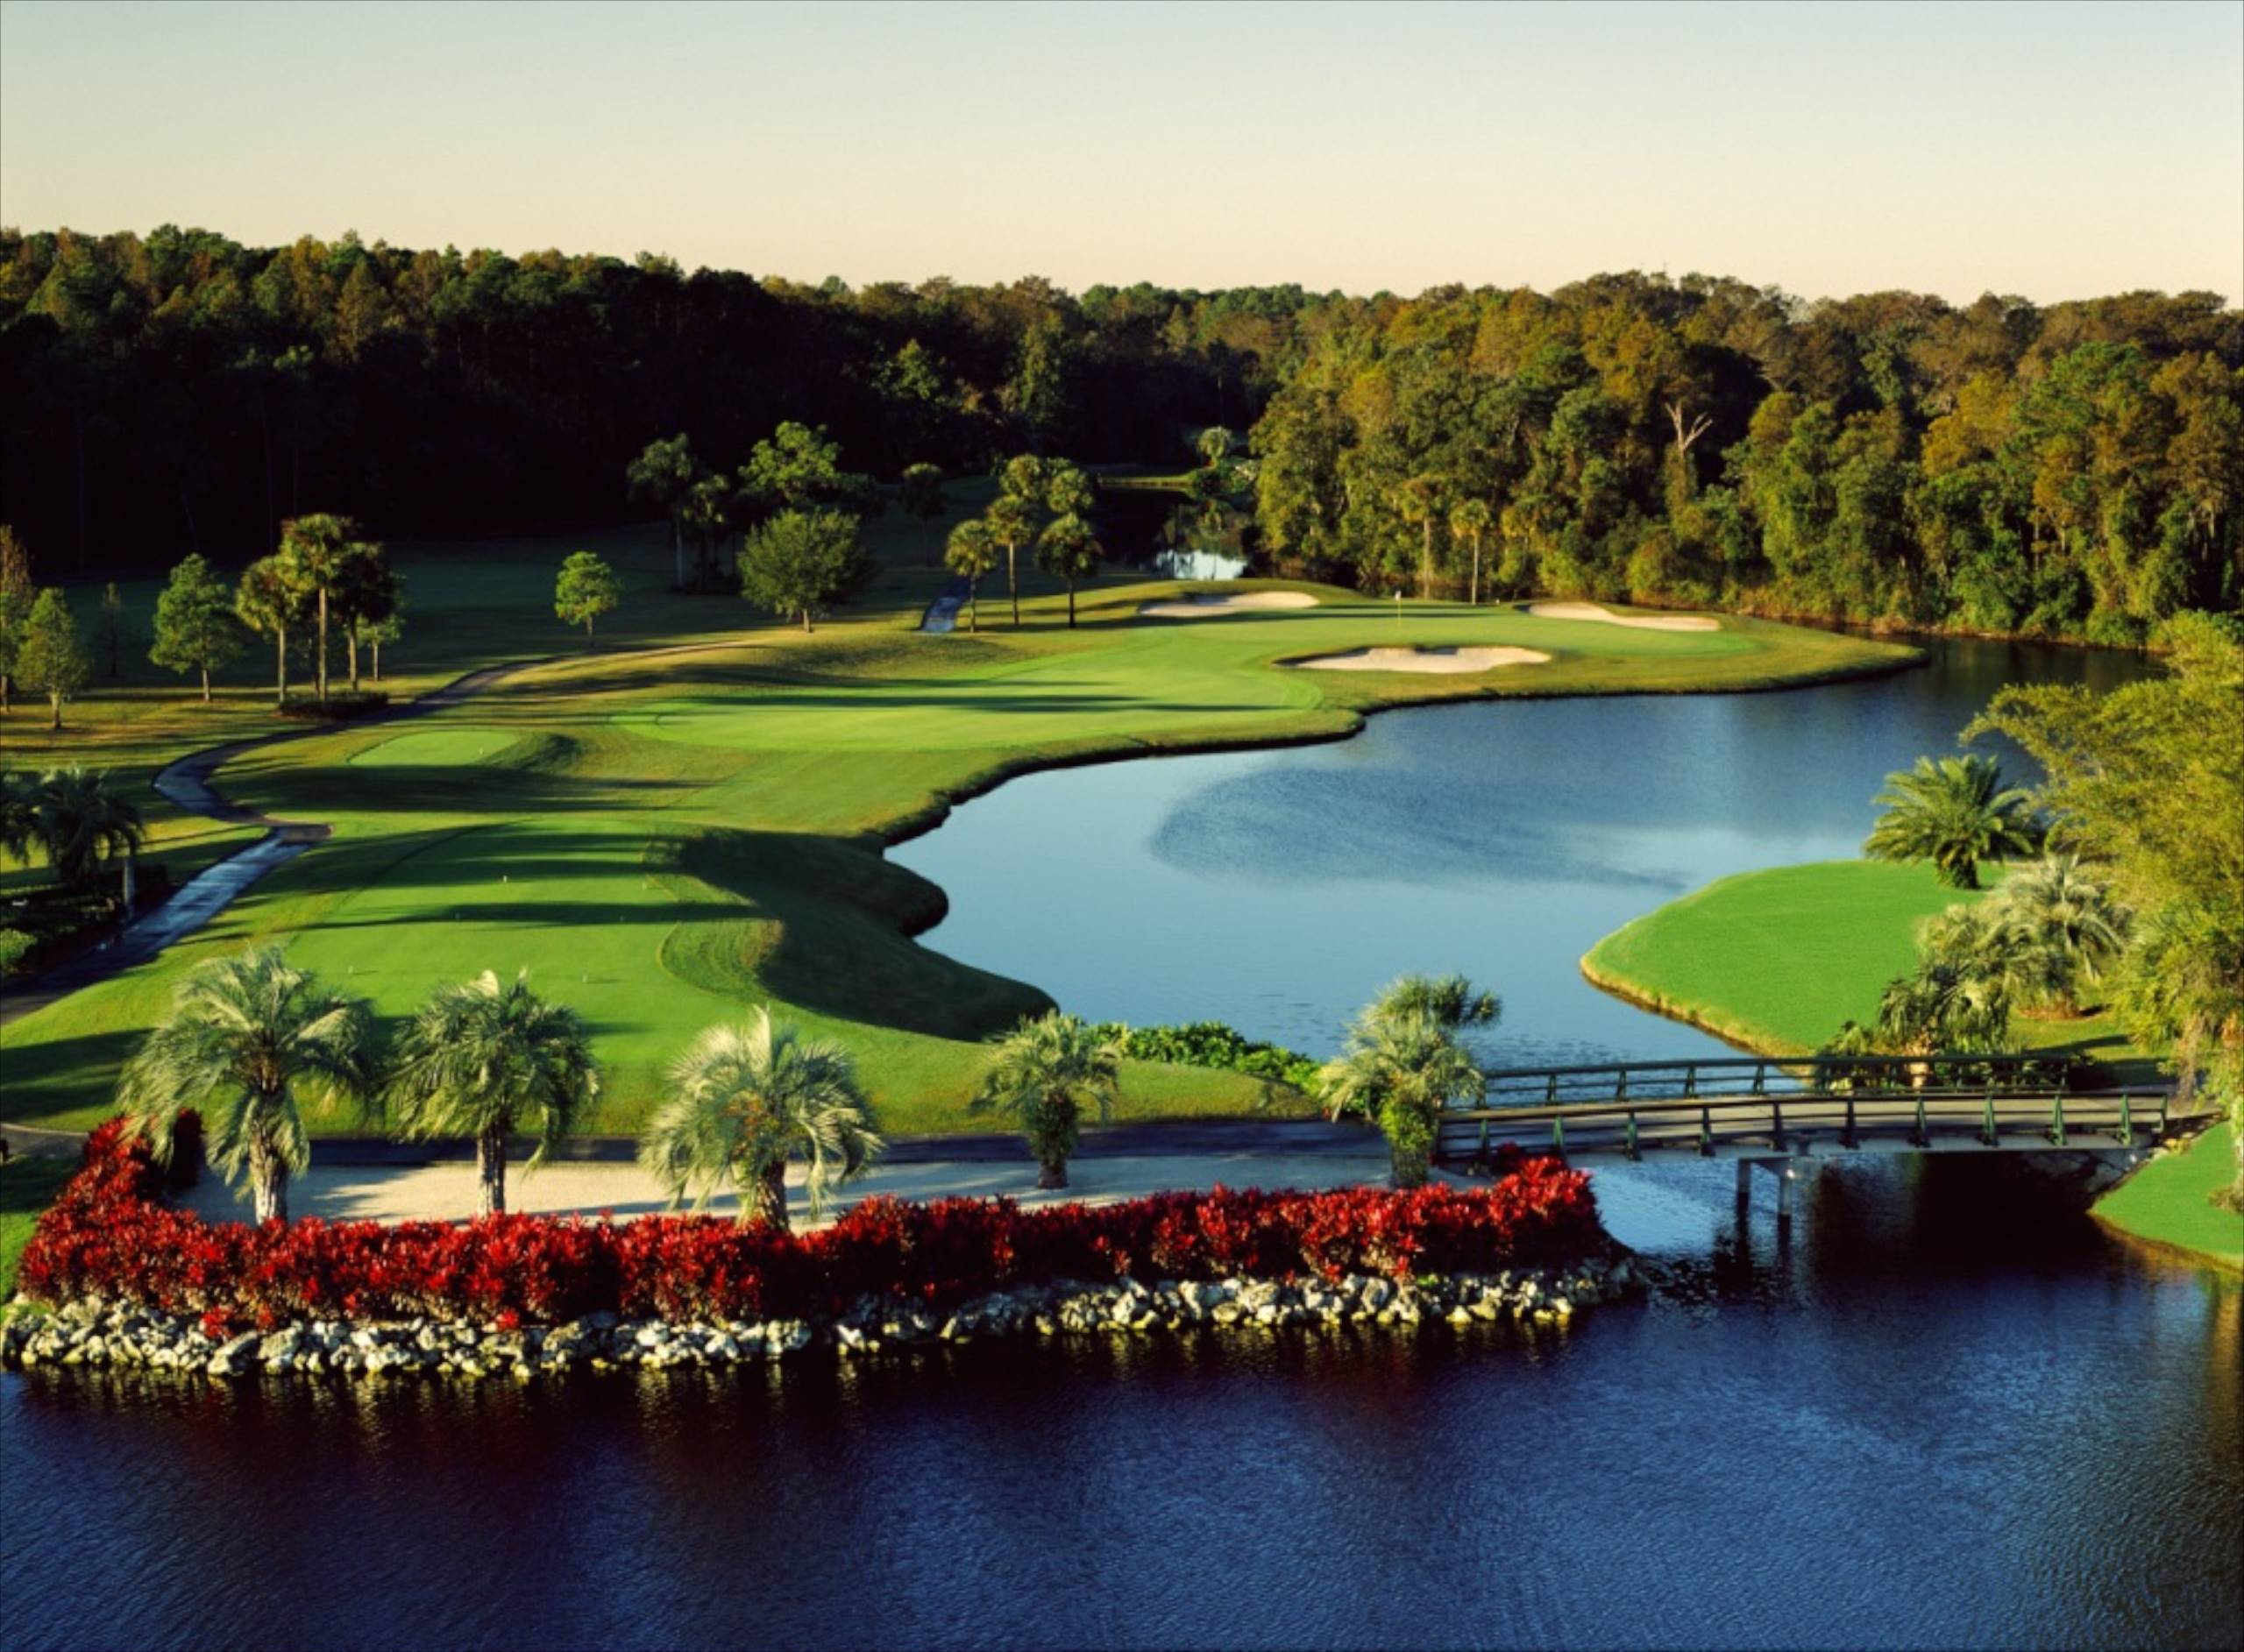 Memorial Day Weekend Golf offer at Palm, Osprey and Lake Beuna Vista courses